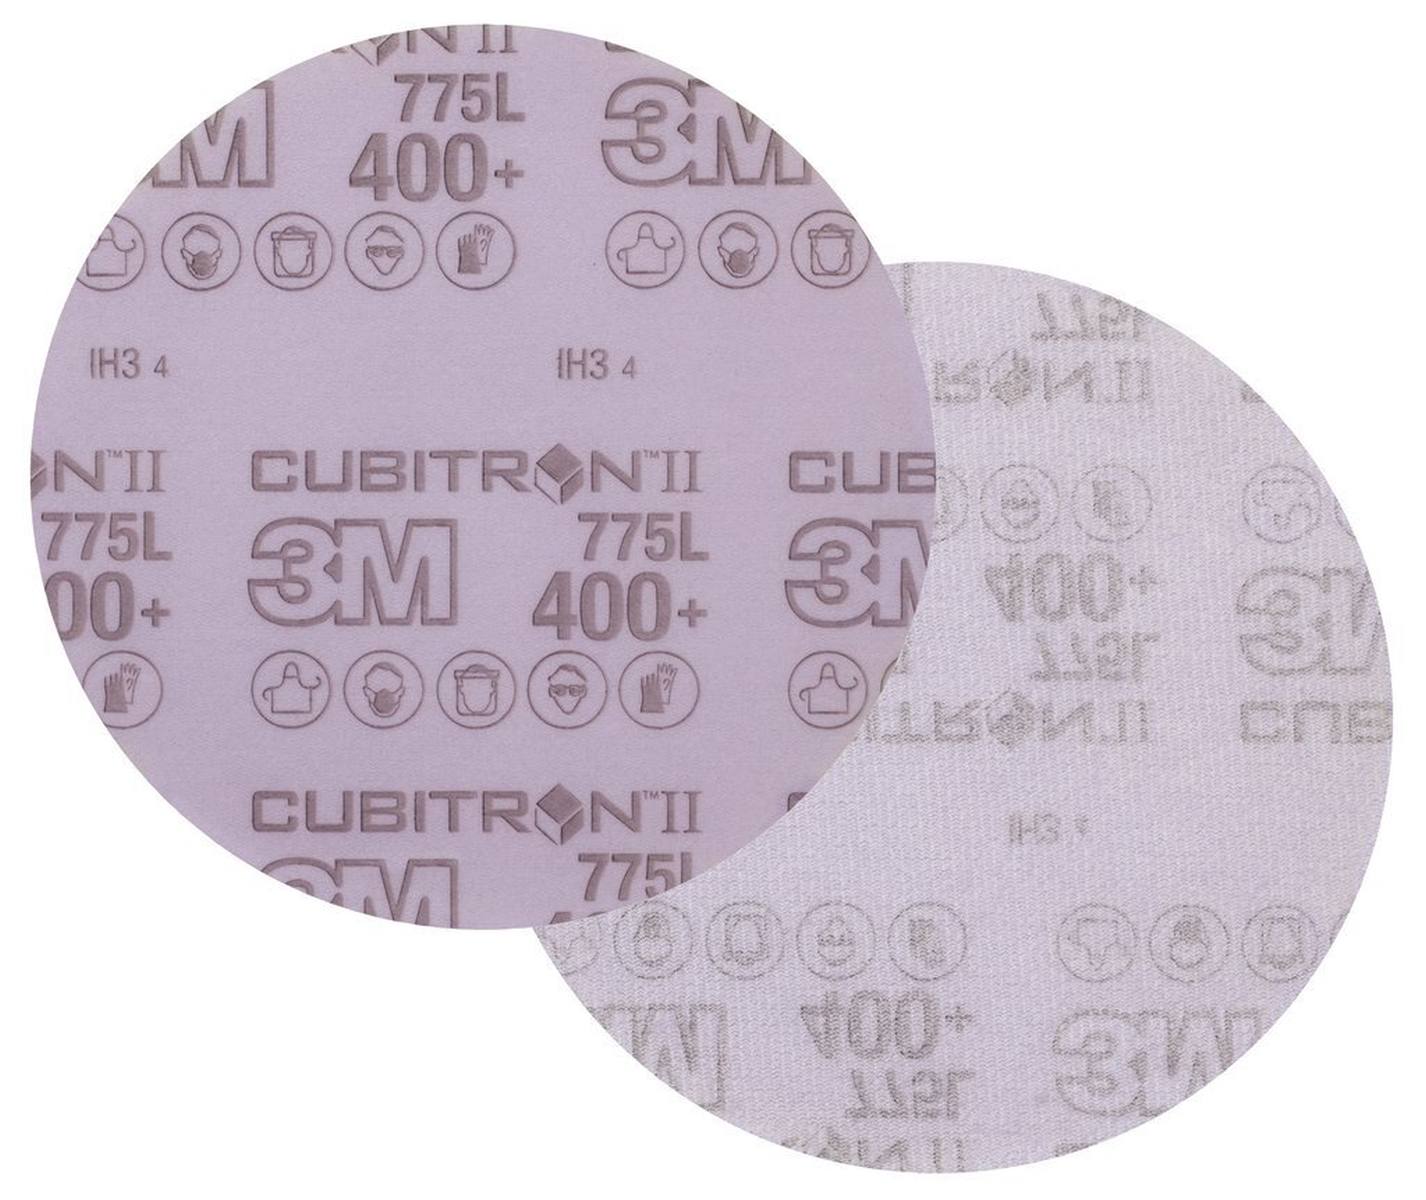 3M Cubitron II Disco de película Hookit 775L, 150 mm, 400+, sin perforar #05056